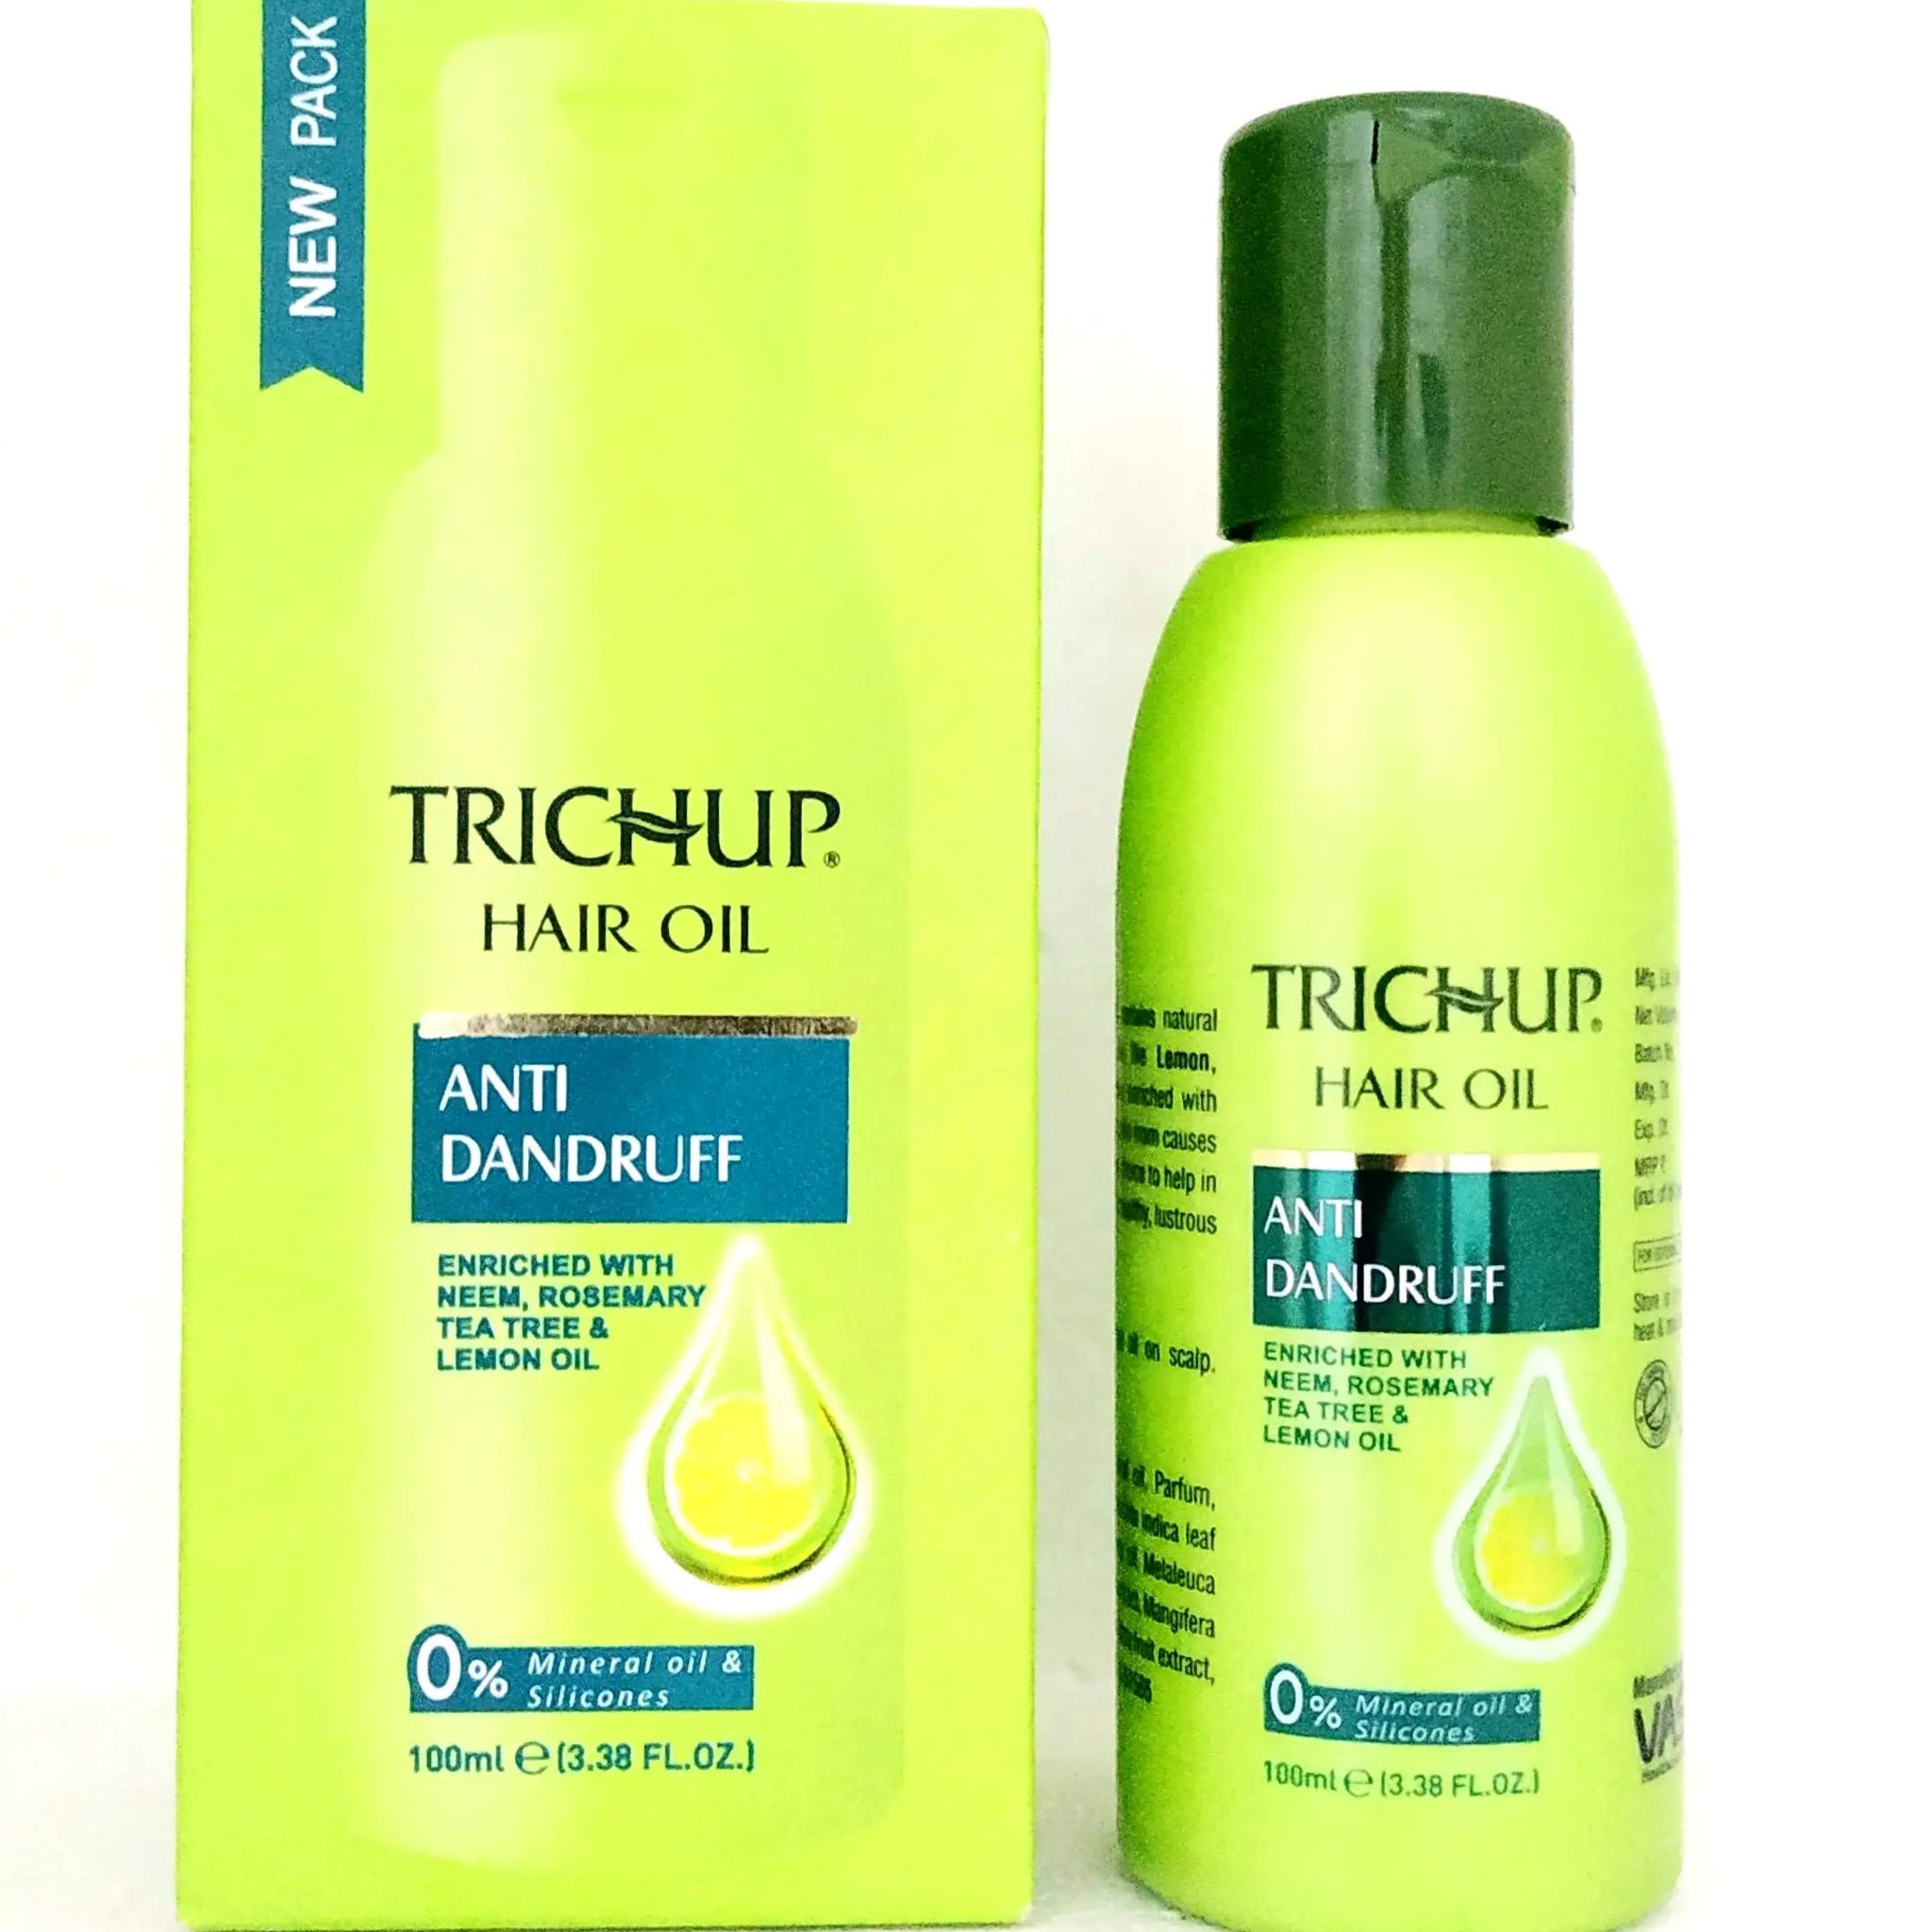 Trichup anti dandruff hair oil 100ml Vasu herbals